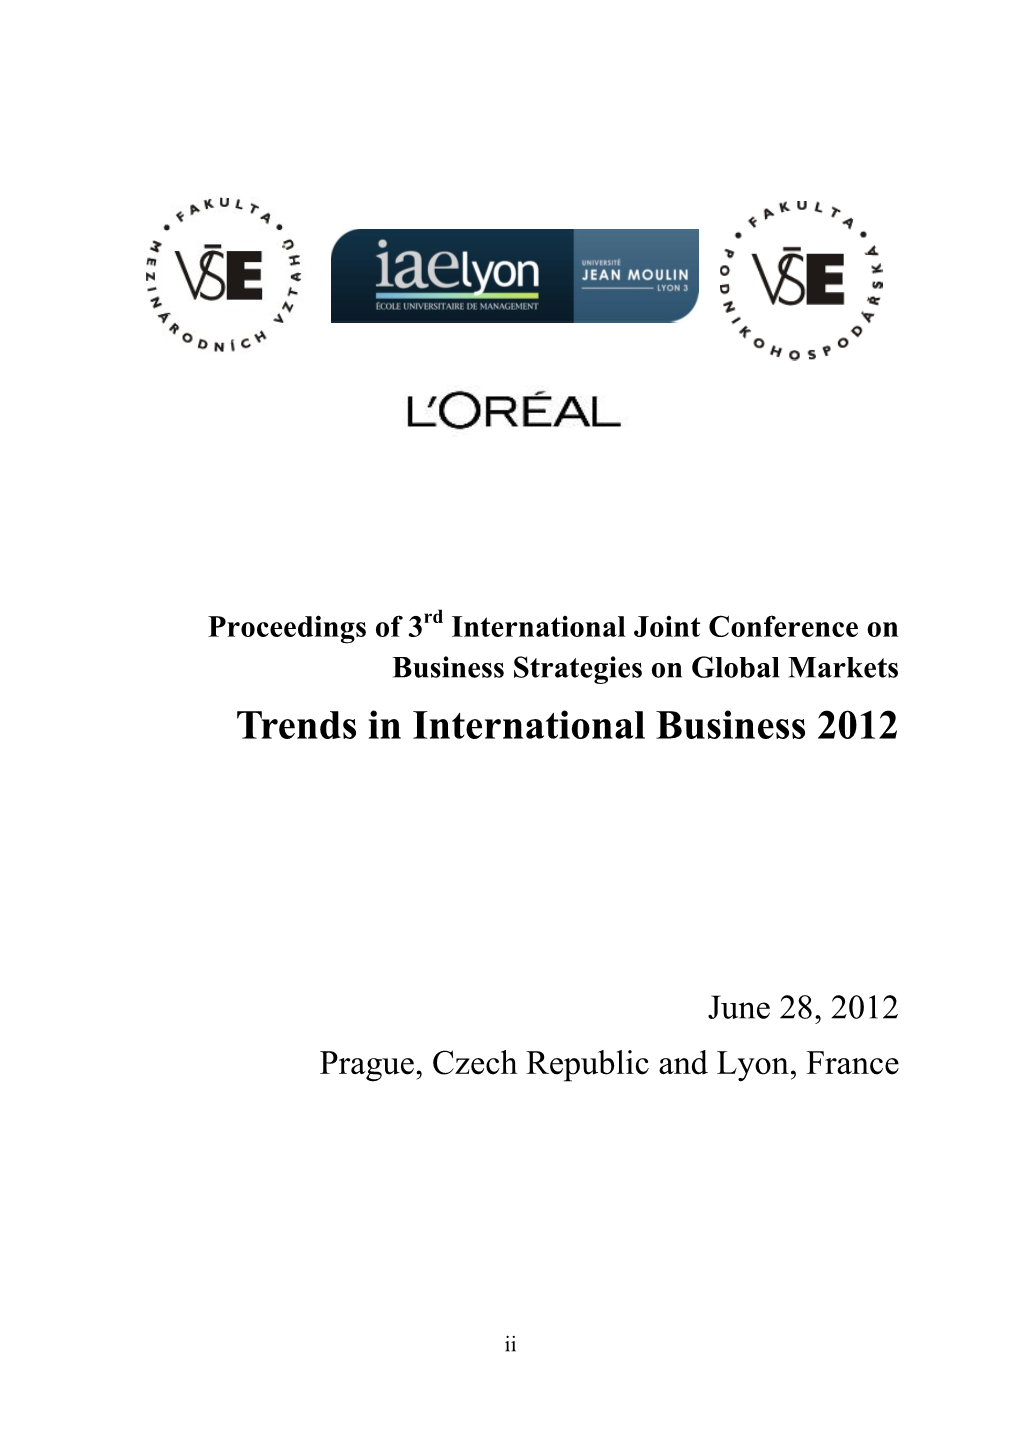 Trends in International Business 2012